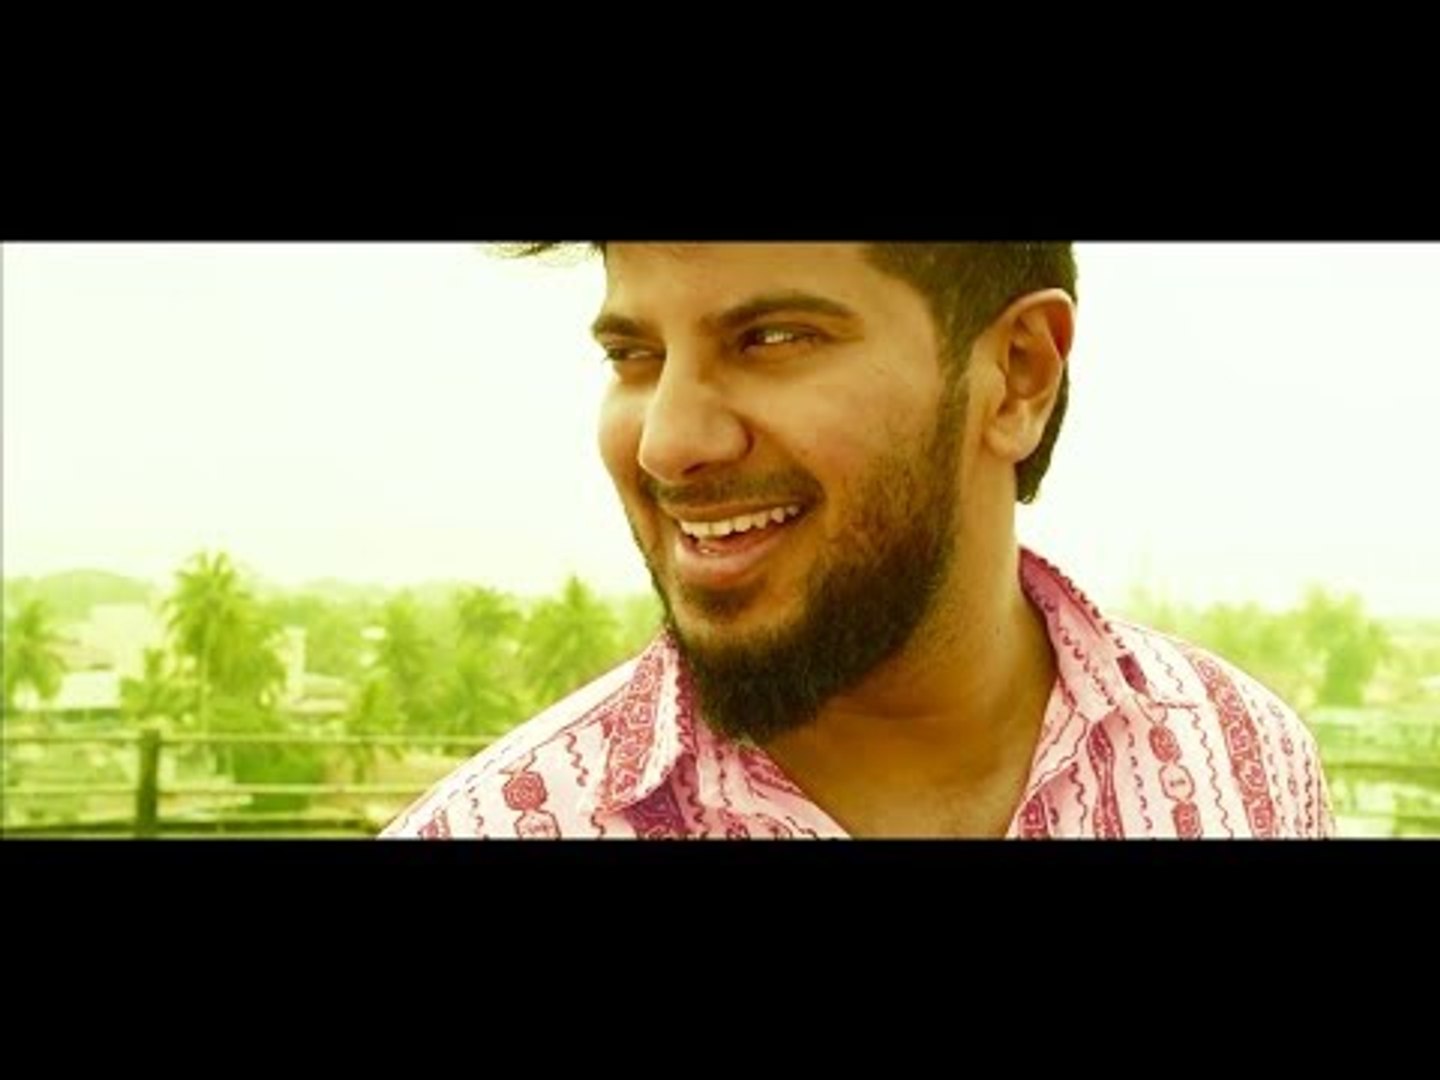 Malayalam Super Hit Action Movie | HD Quality | Malayalam Action Full Movie | HD